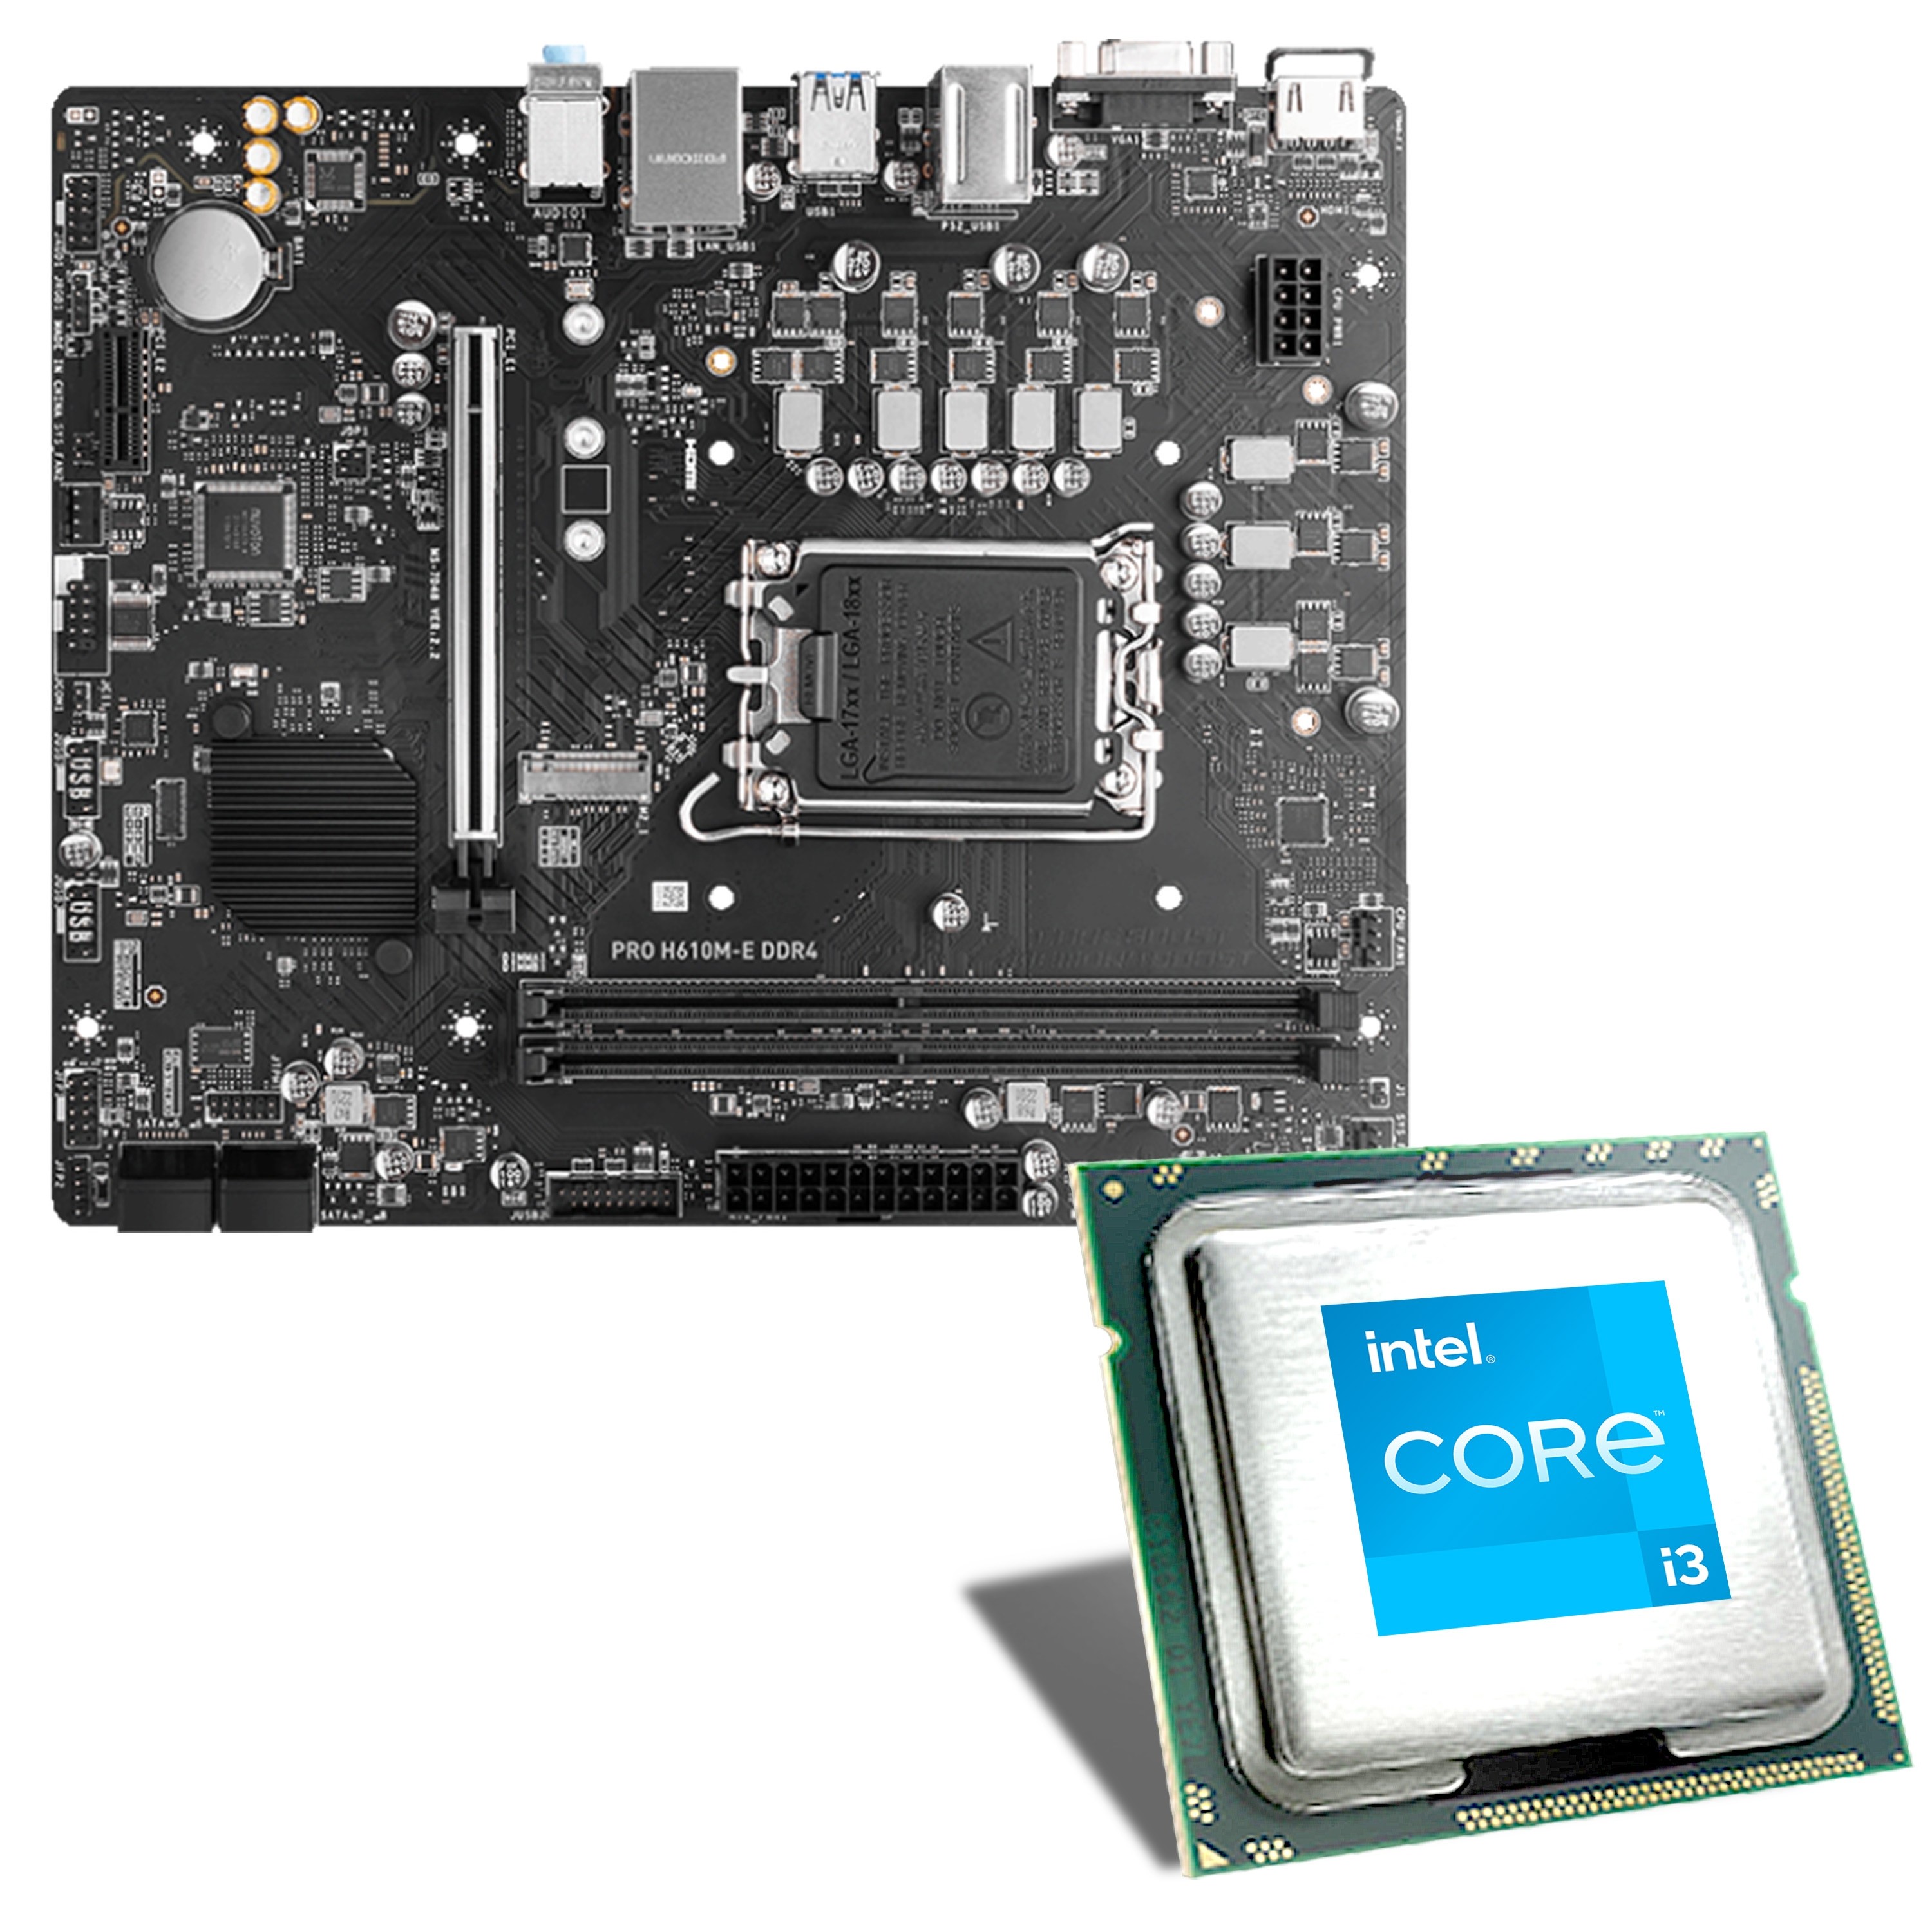 Intel Core i5-12600KF Processor Kit with Acer Predator BiFrost